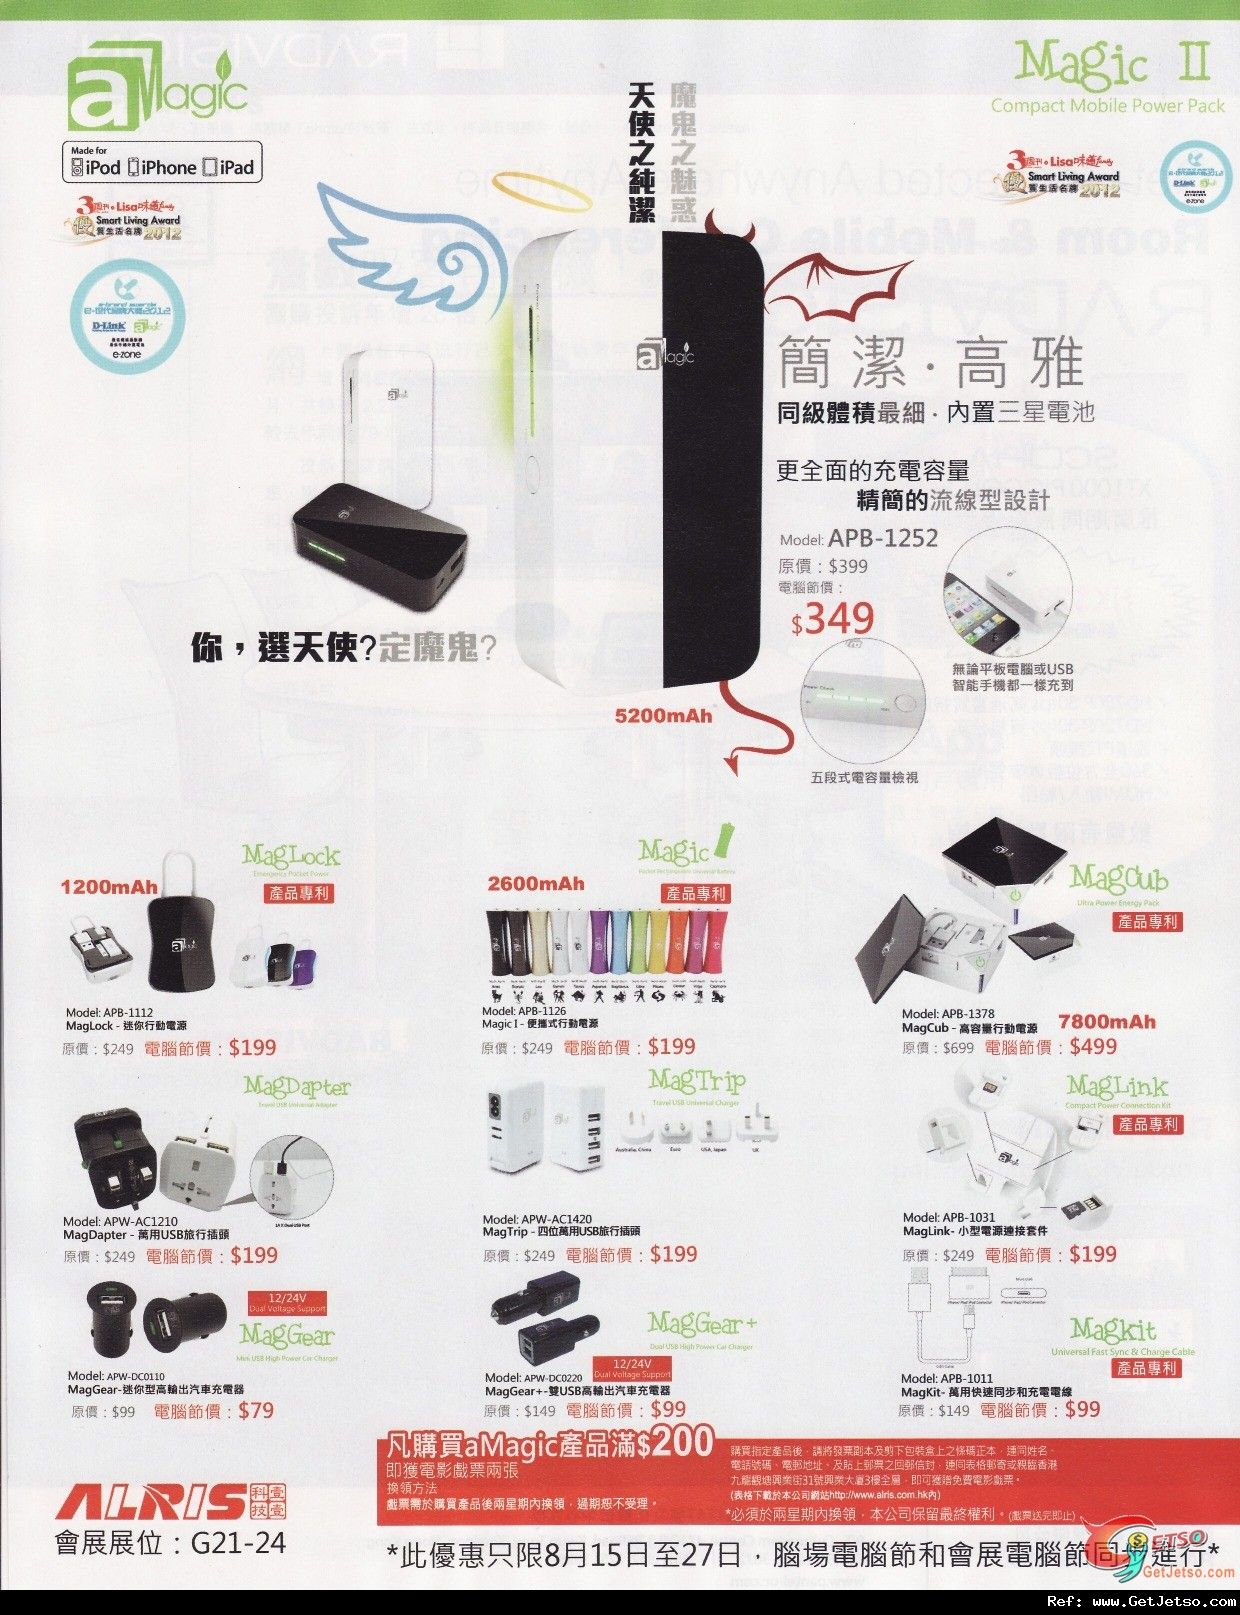 aMagic 智能手機流動充電器購買優惠@電腦通訊節2012圖片1